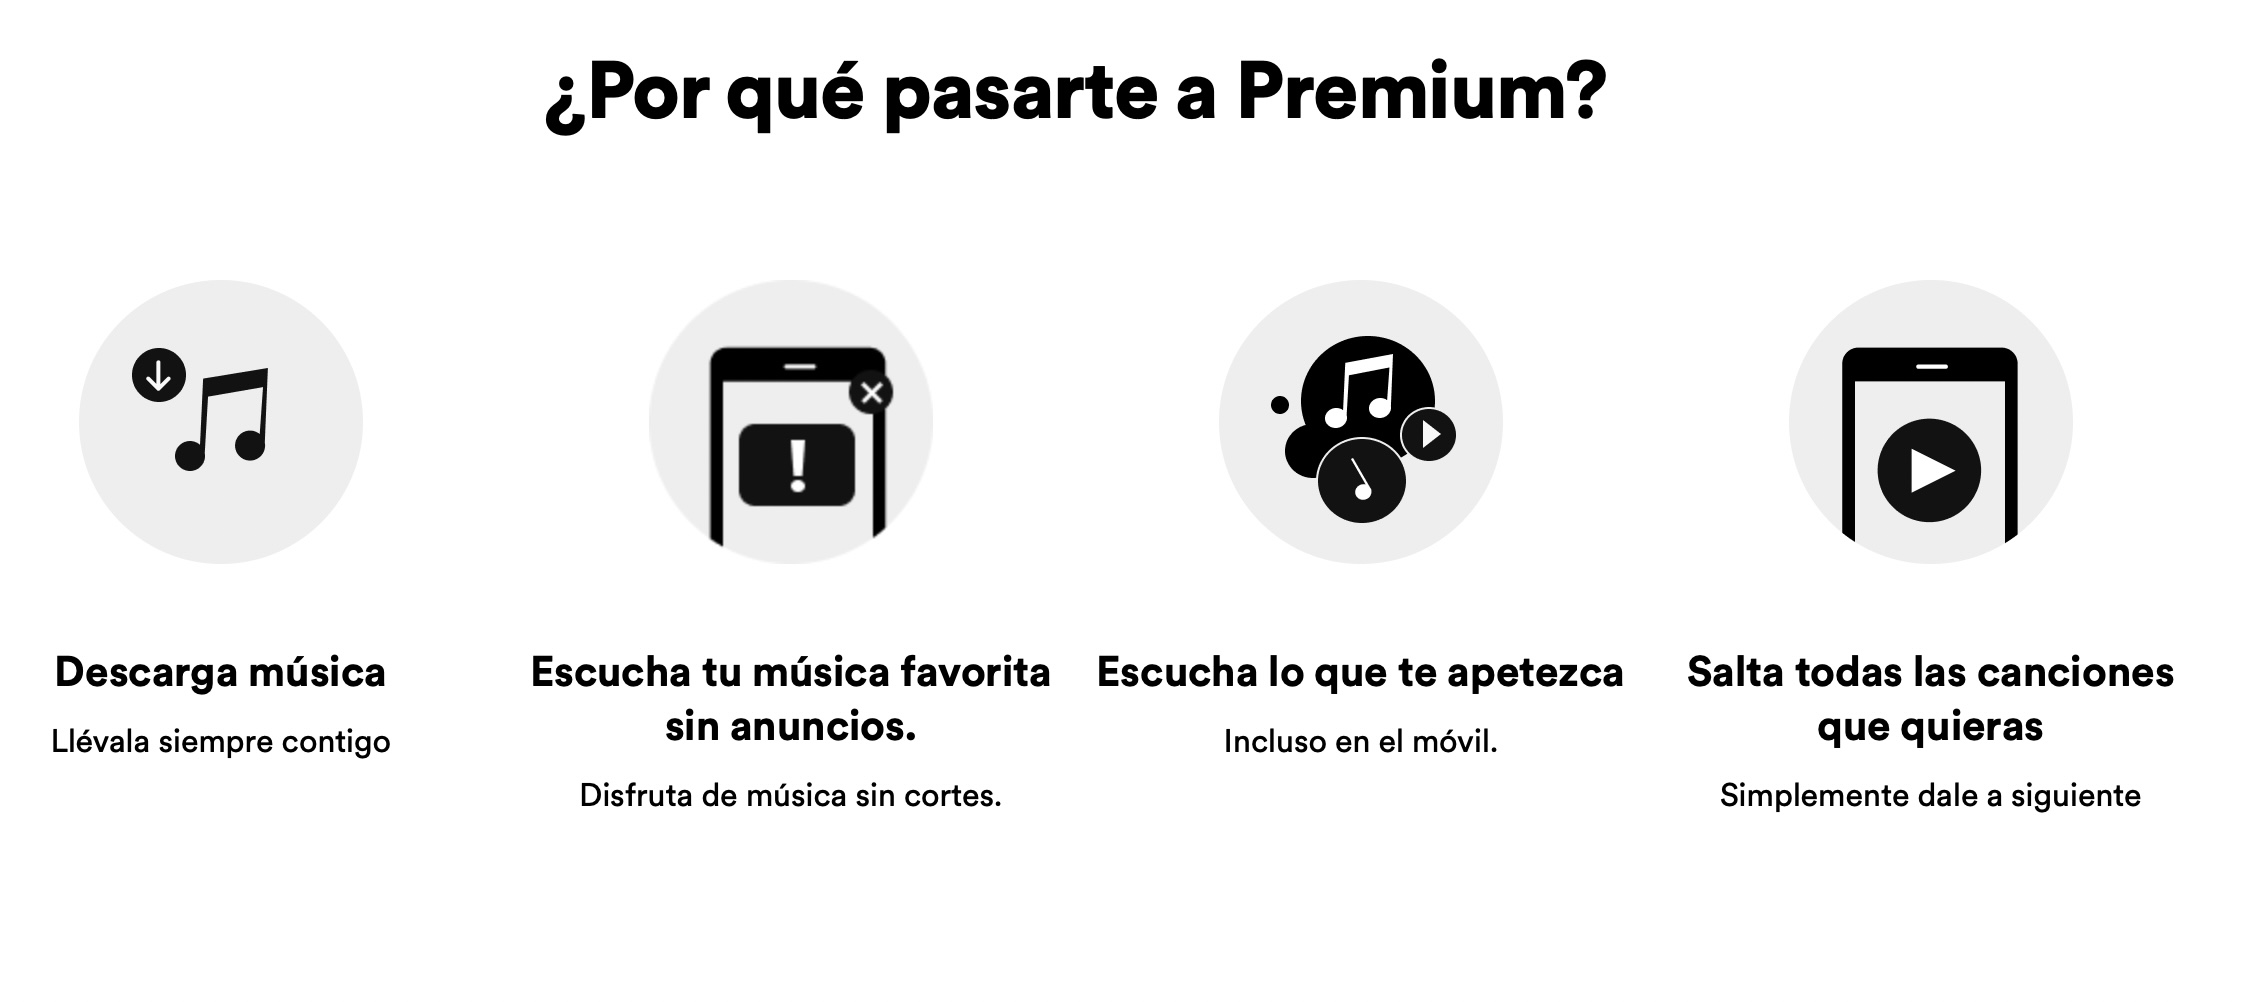 Hoy tienes Spotify Premium gratis 3 meses